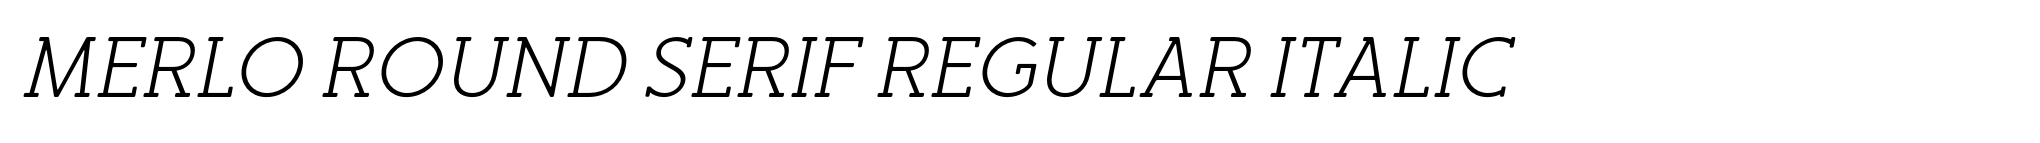 Merlo Round Serif Regular Italic image